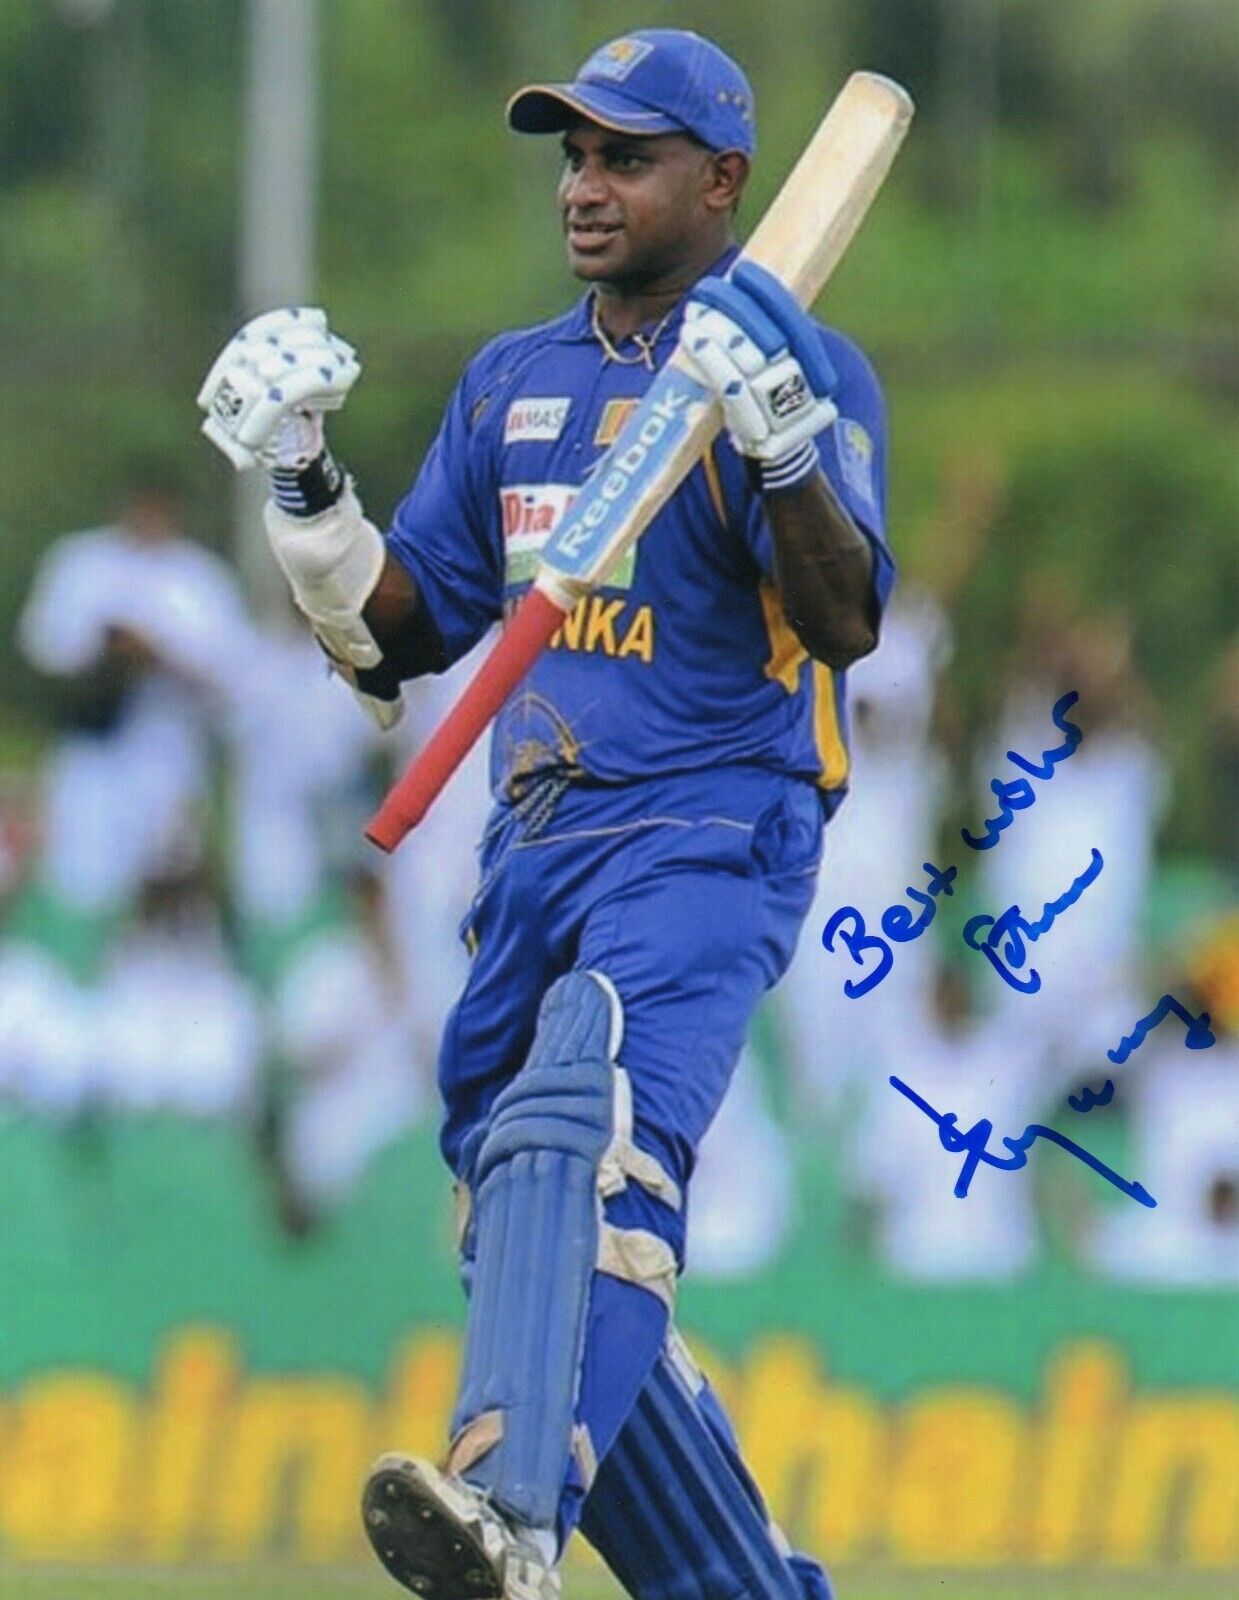 8x10 Original Autographed Photo of Sri Lankan Cricketer Sanath Jayasuriya